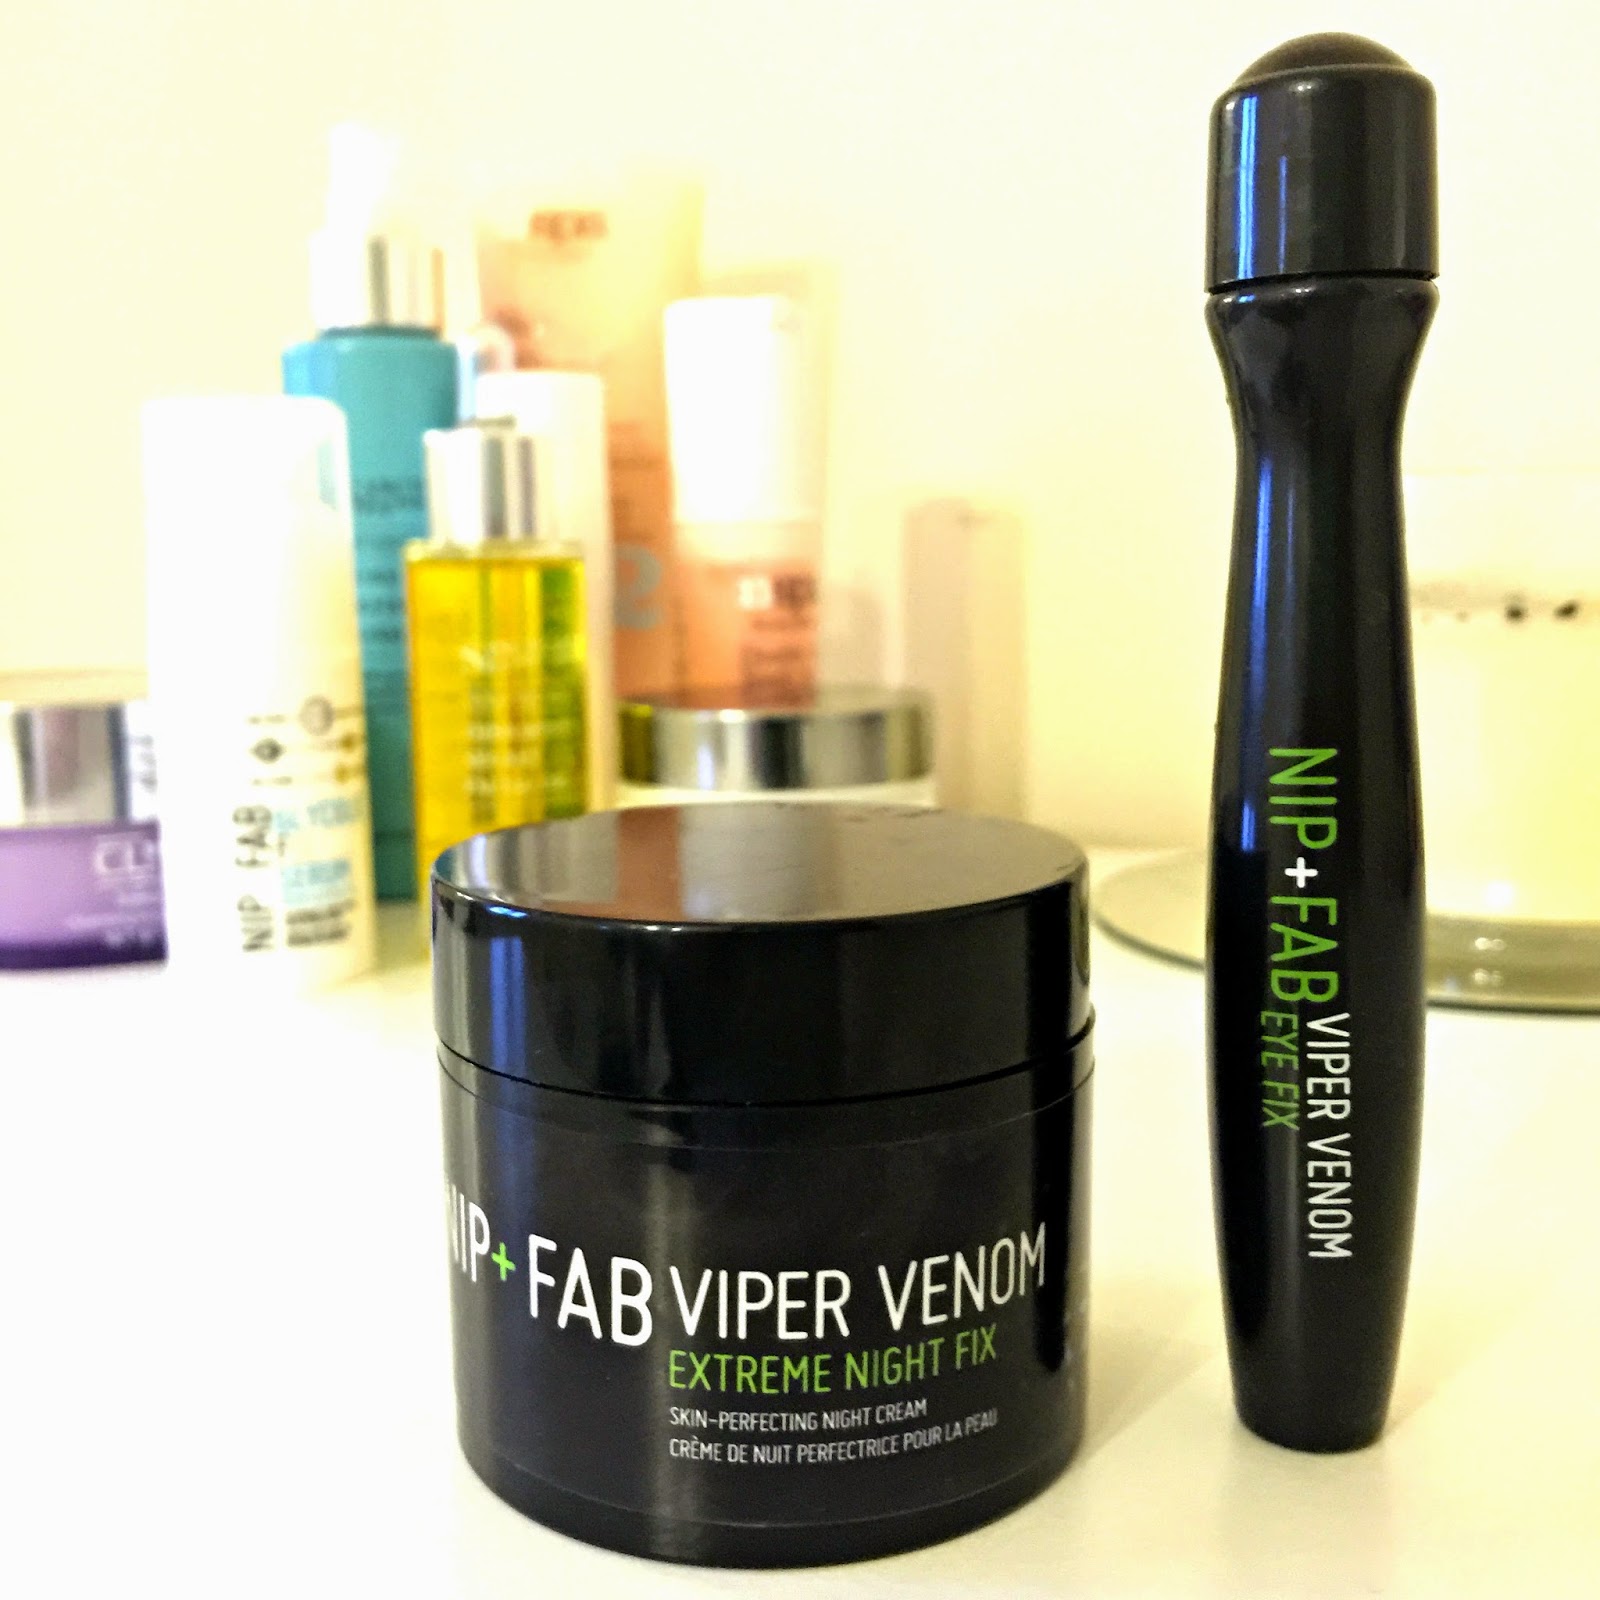 nip and fab viper venom extreme night fix reviews